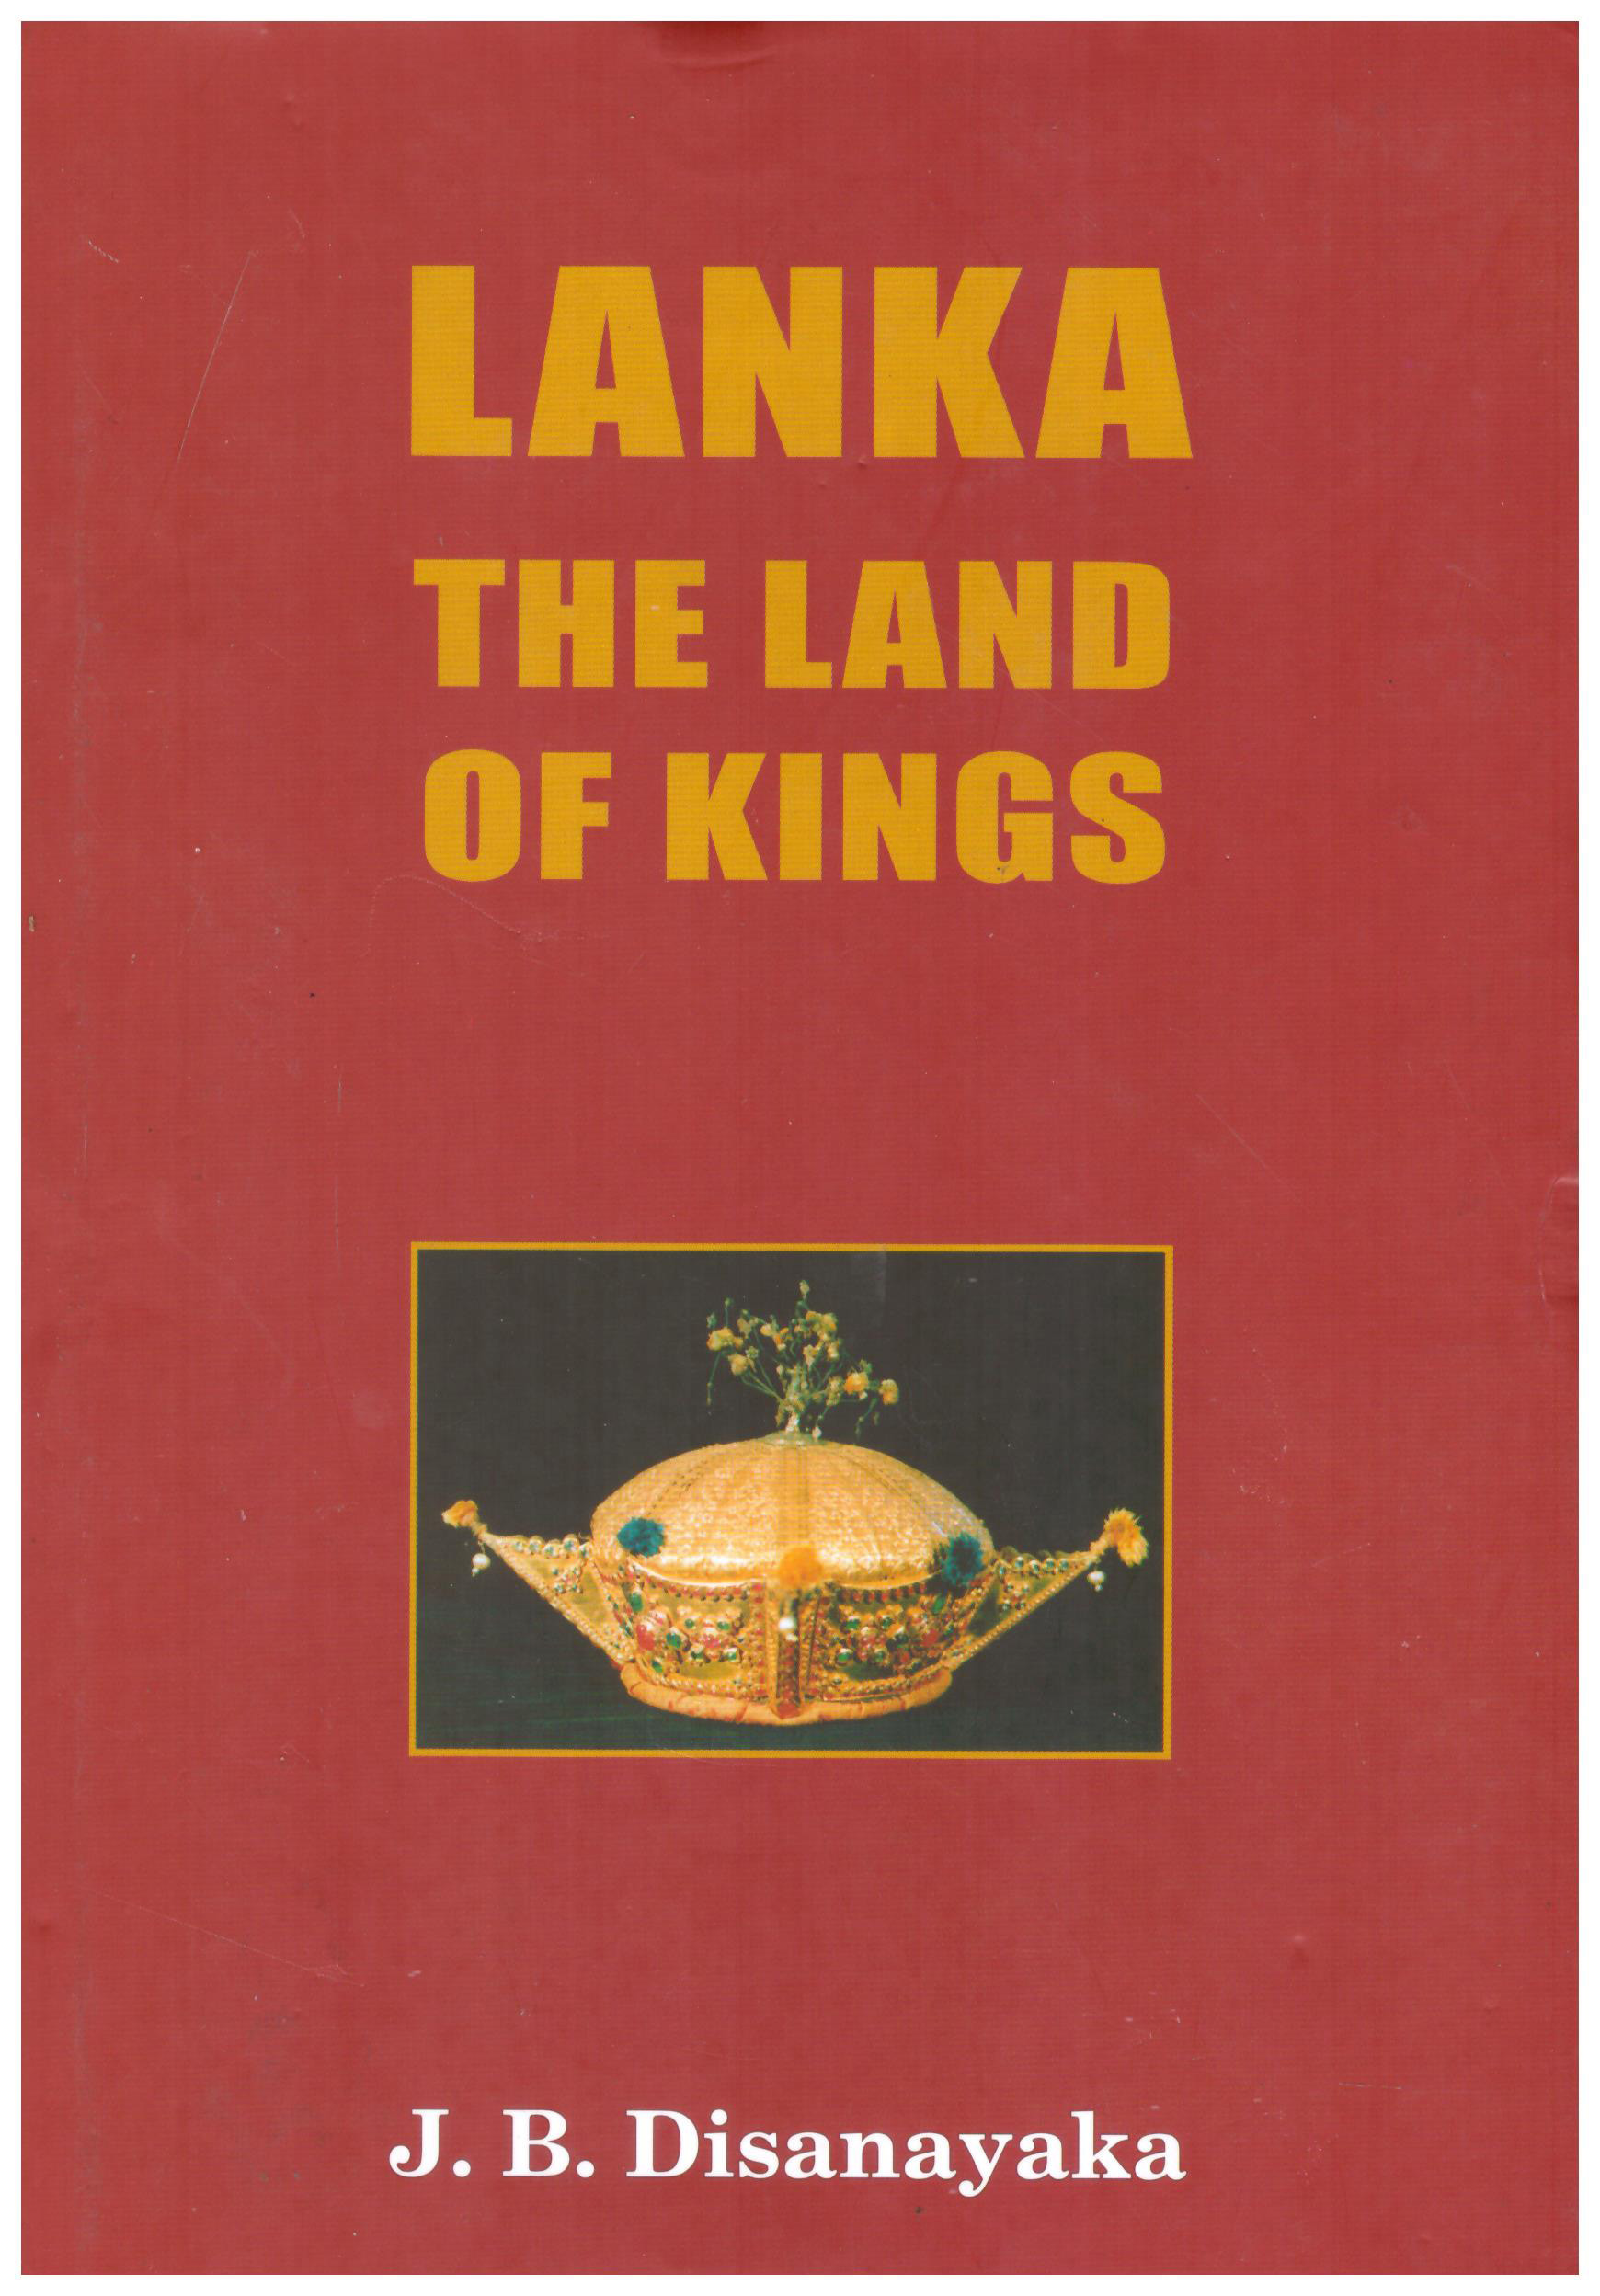 Lanka The Land of Kings